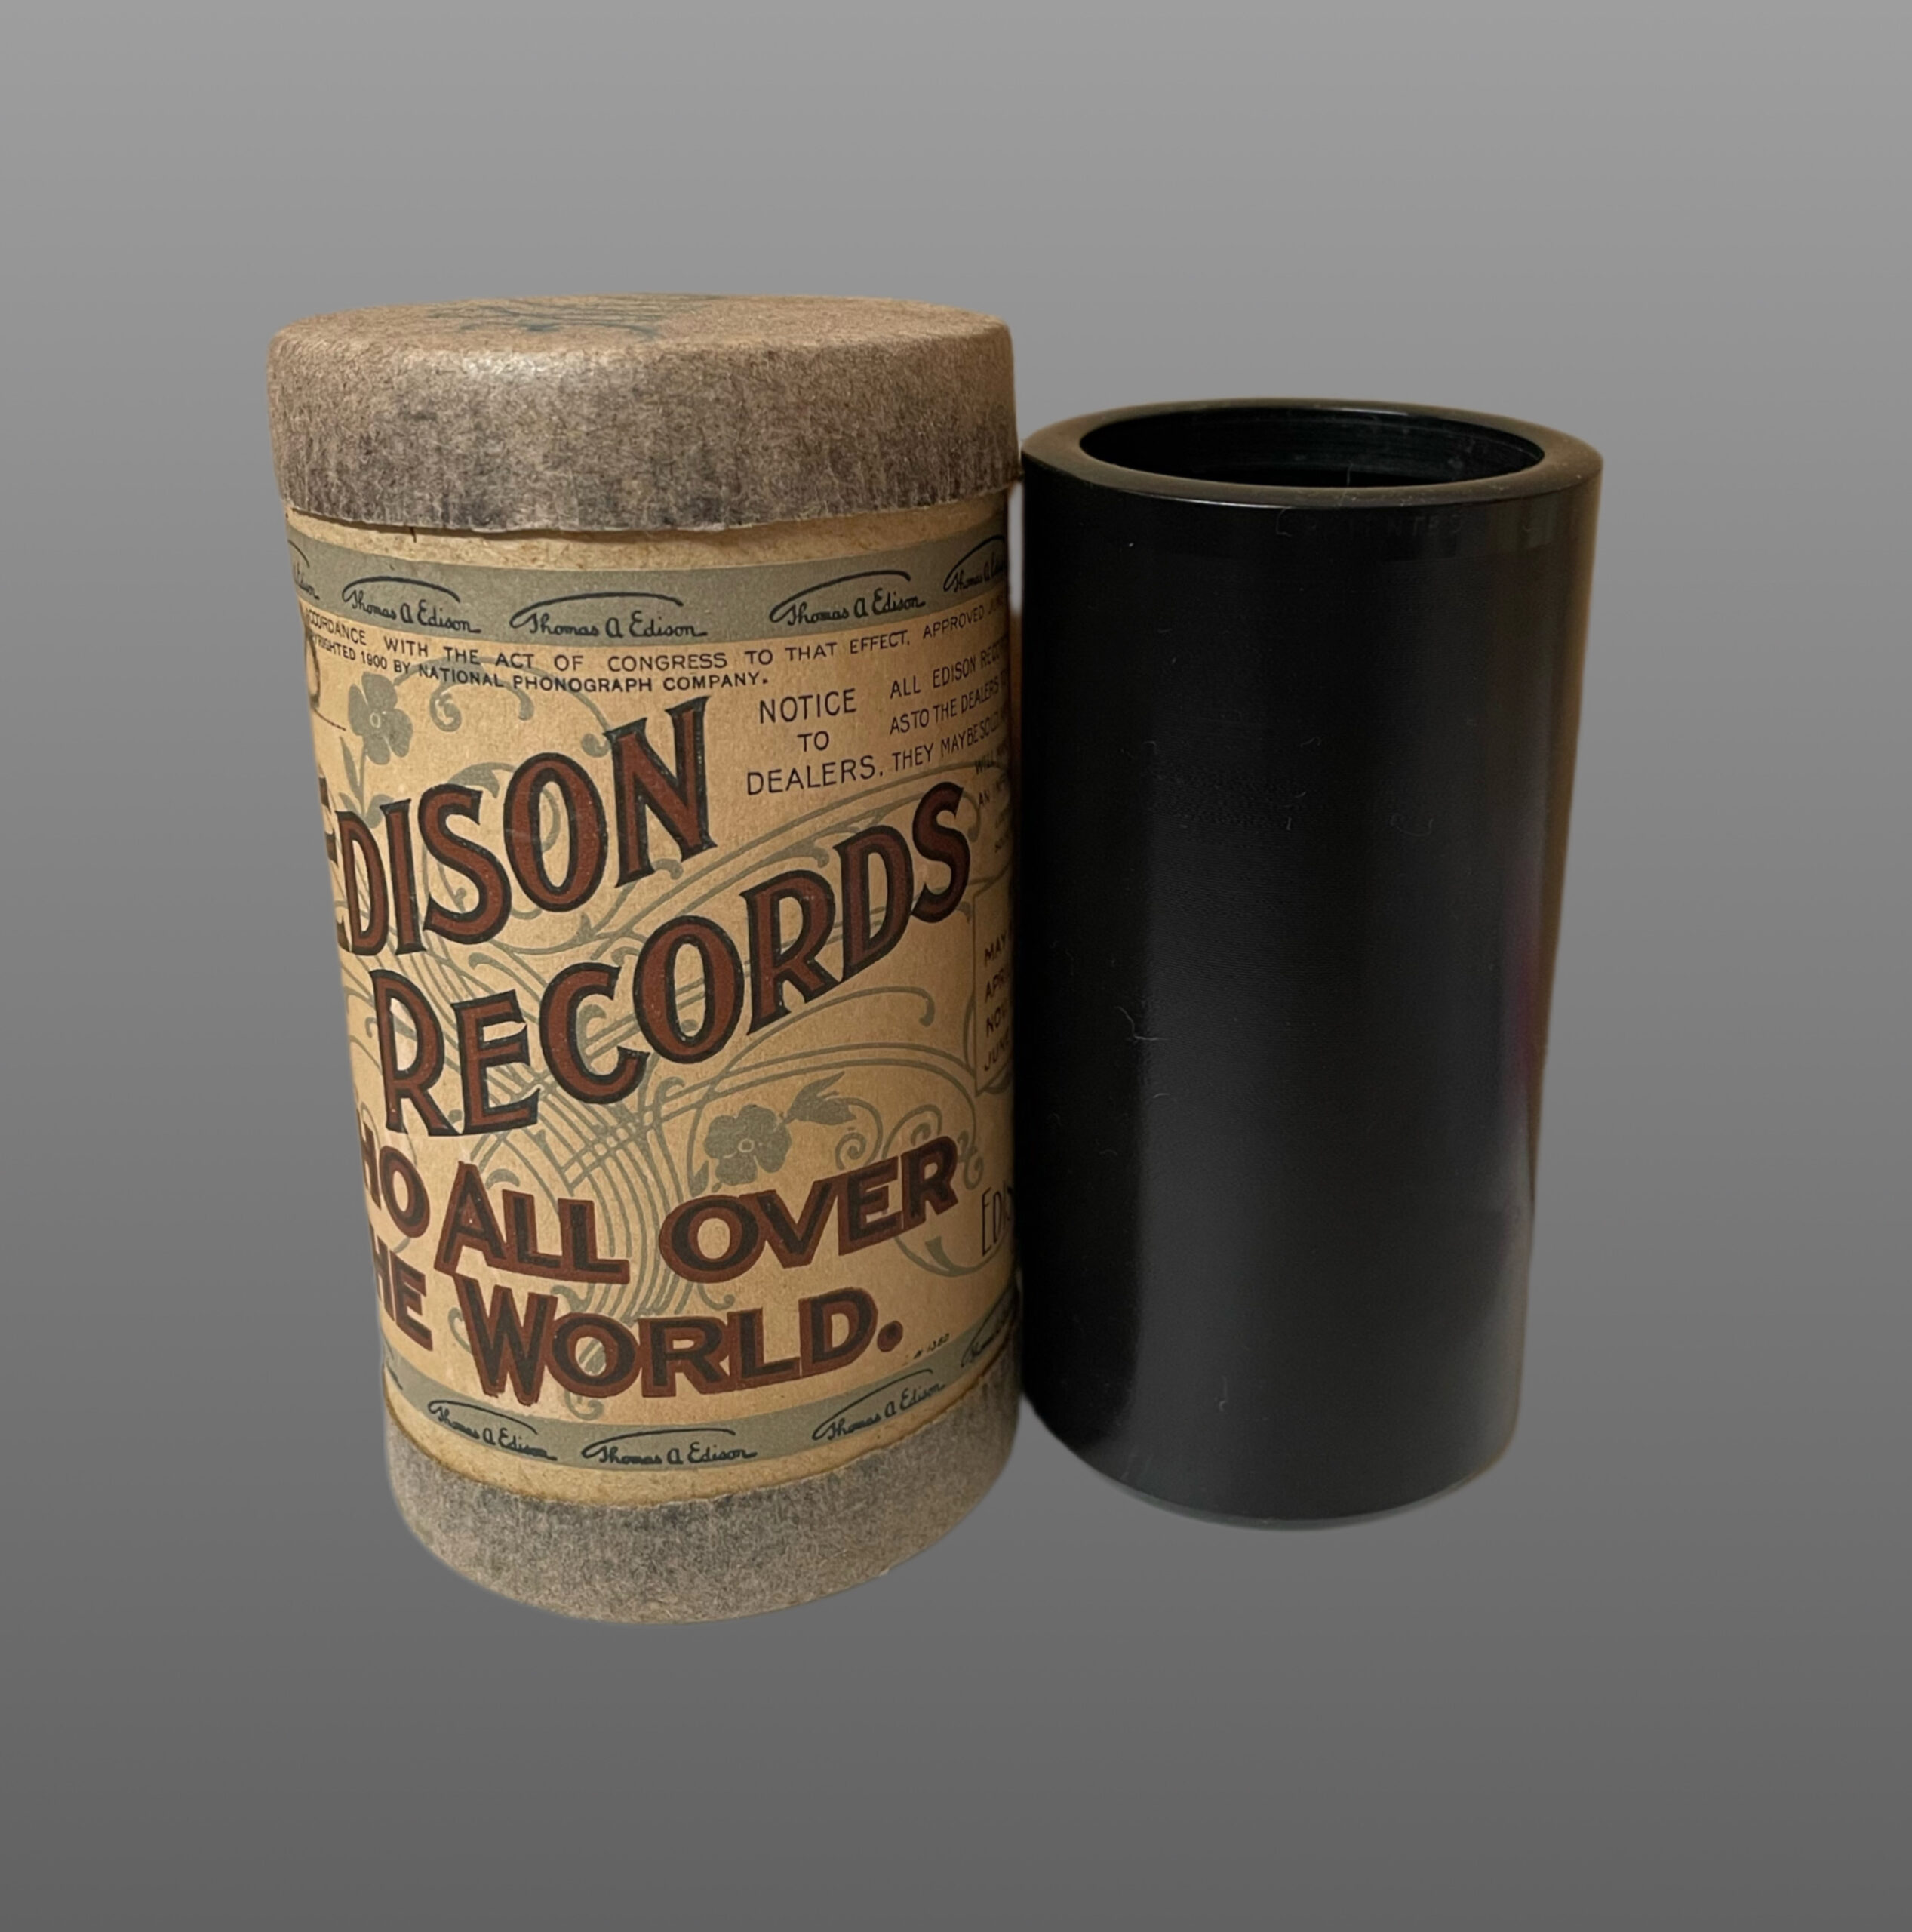 Edison 2-minute Cylinder…” Muggsy’s Dream”